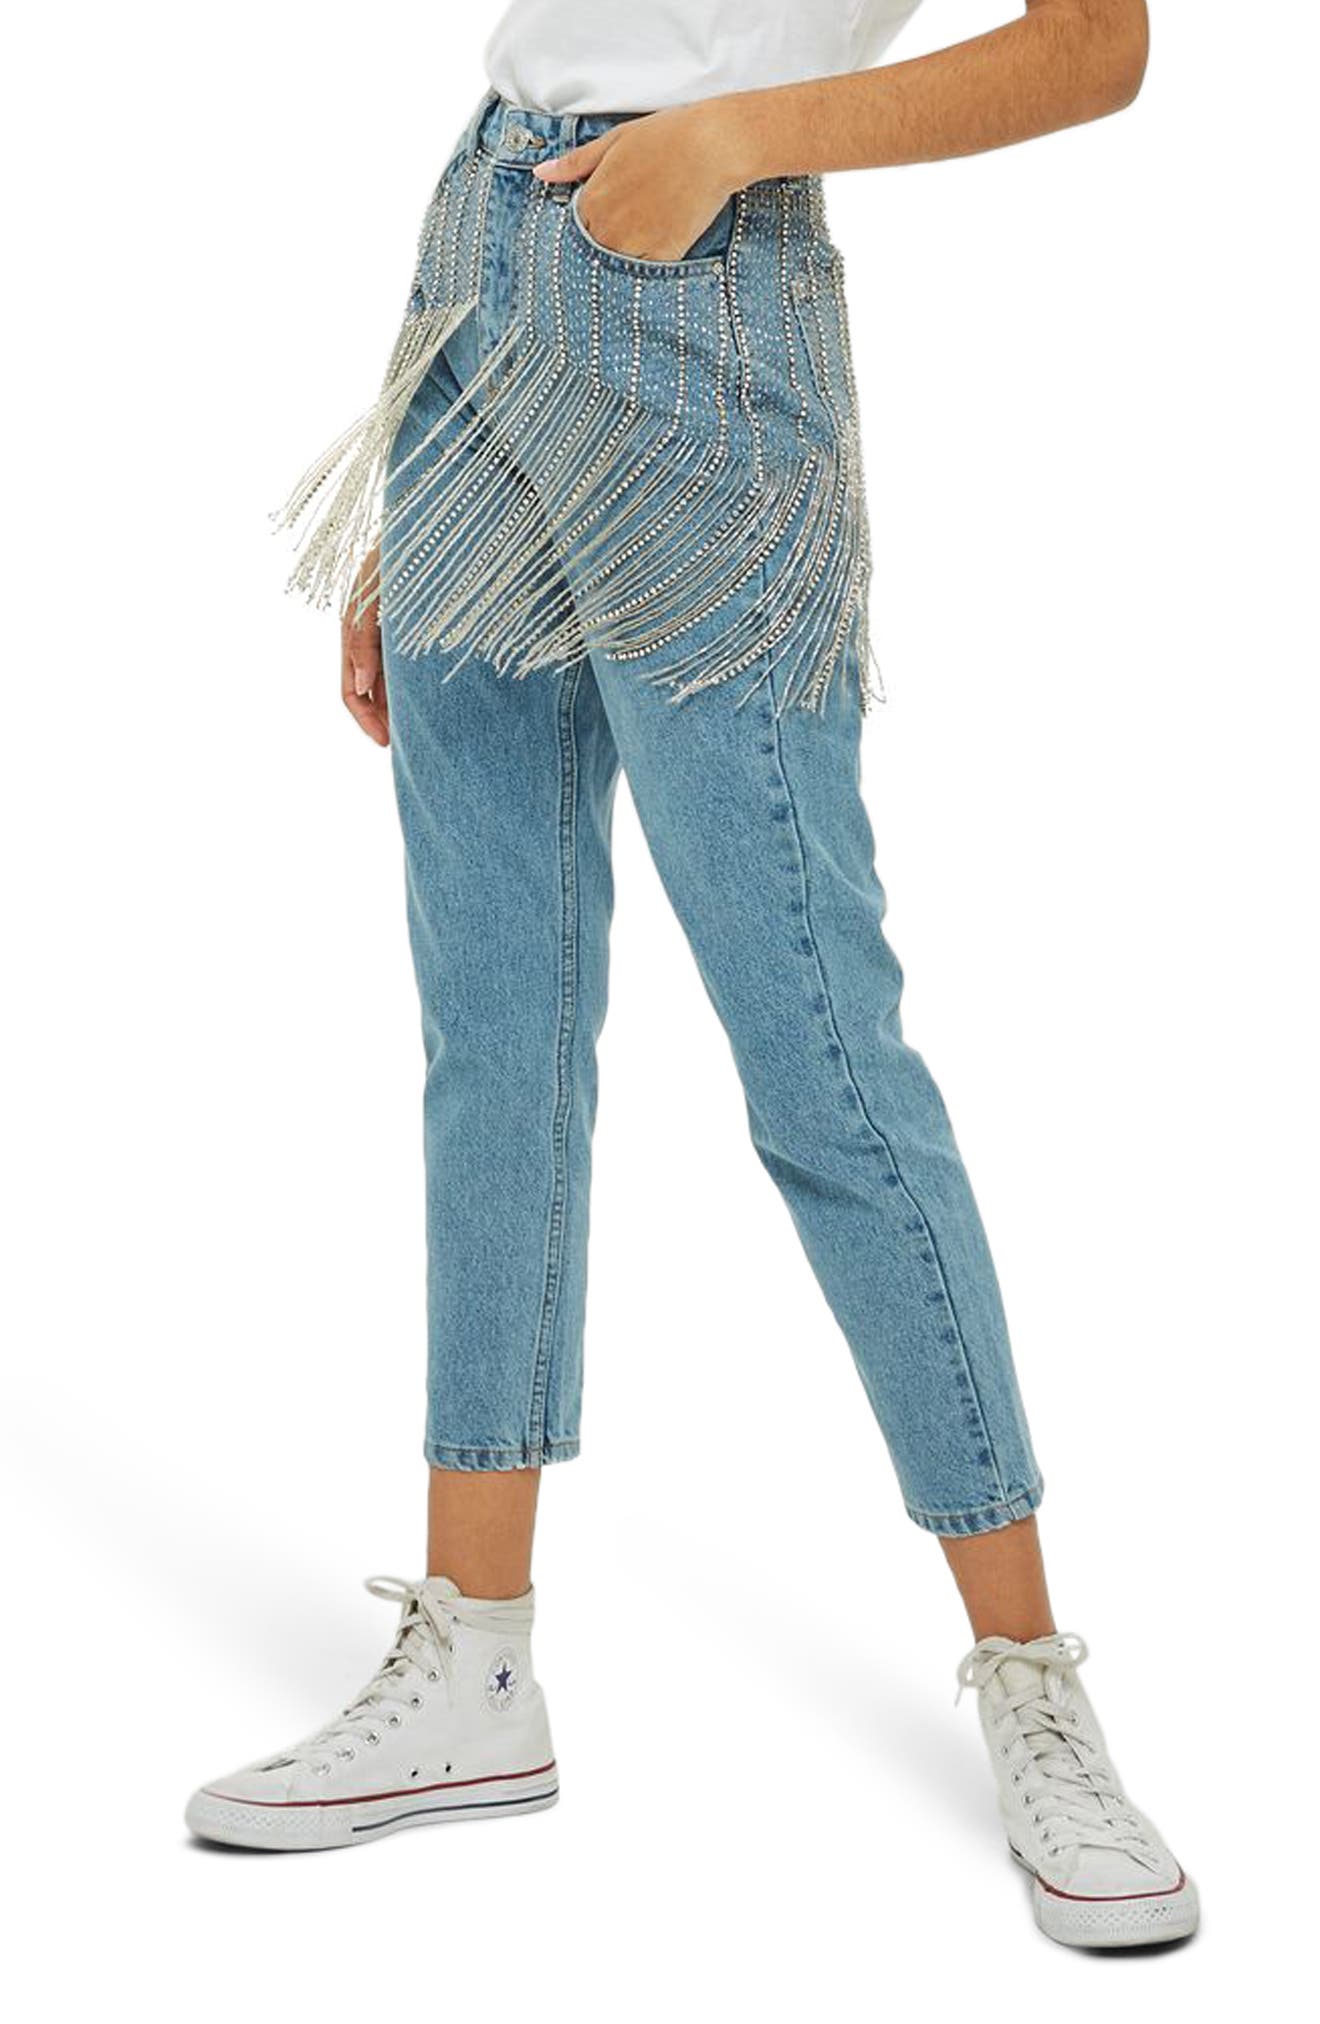 rhinestone jeans topshop